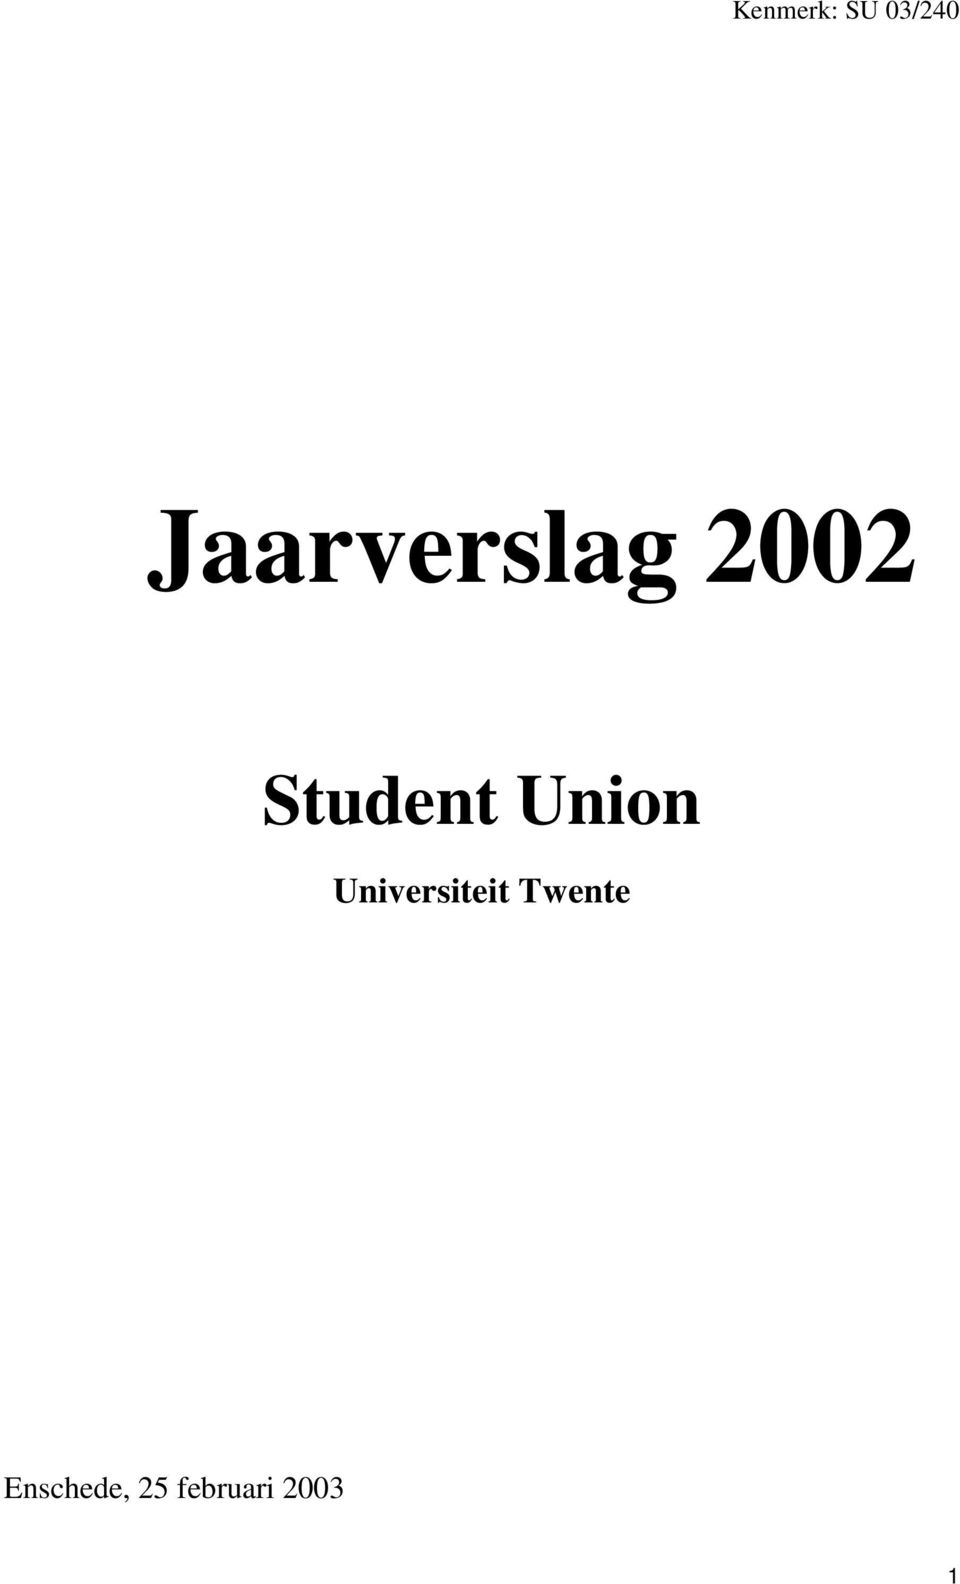 Union Universiteit